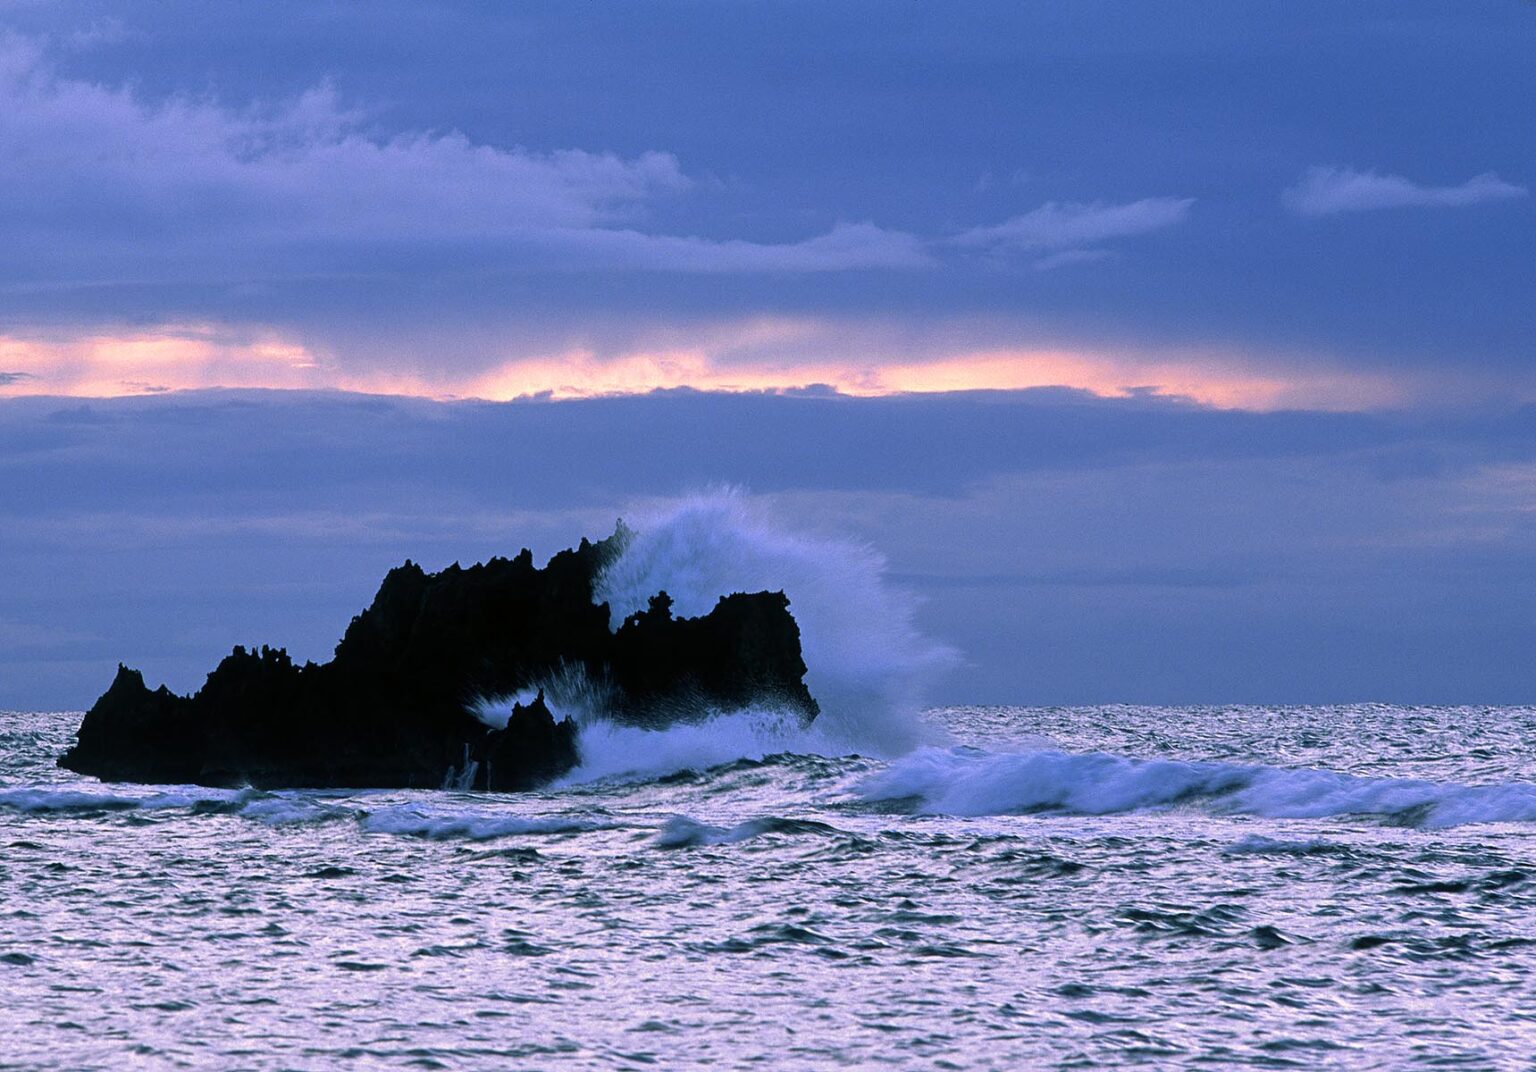 CARIBBEAN SEA SURF breaking over ROCK OUTCROPPING in WEST END BAY - BAY ISLANDS, ROATAN, HONDURAS